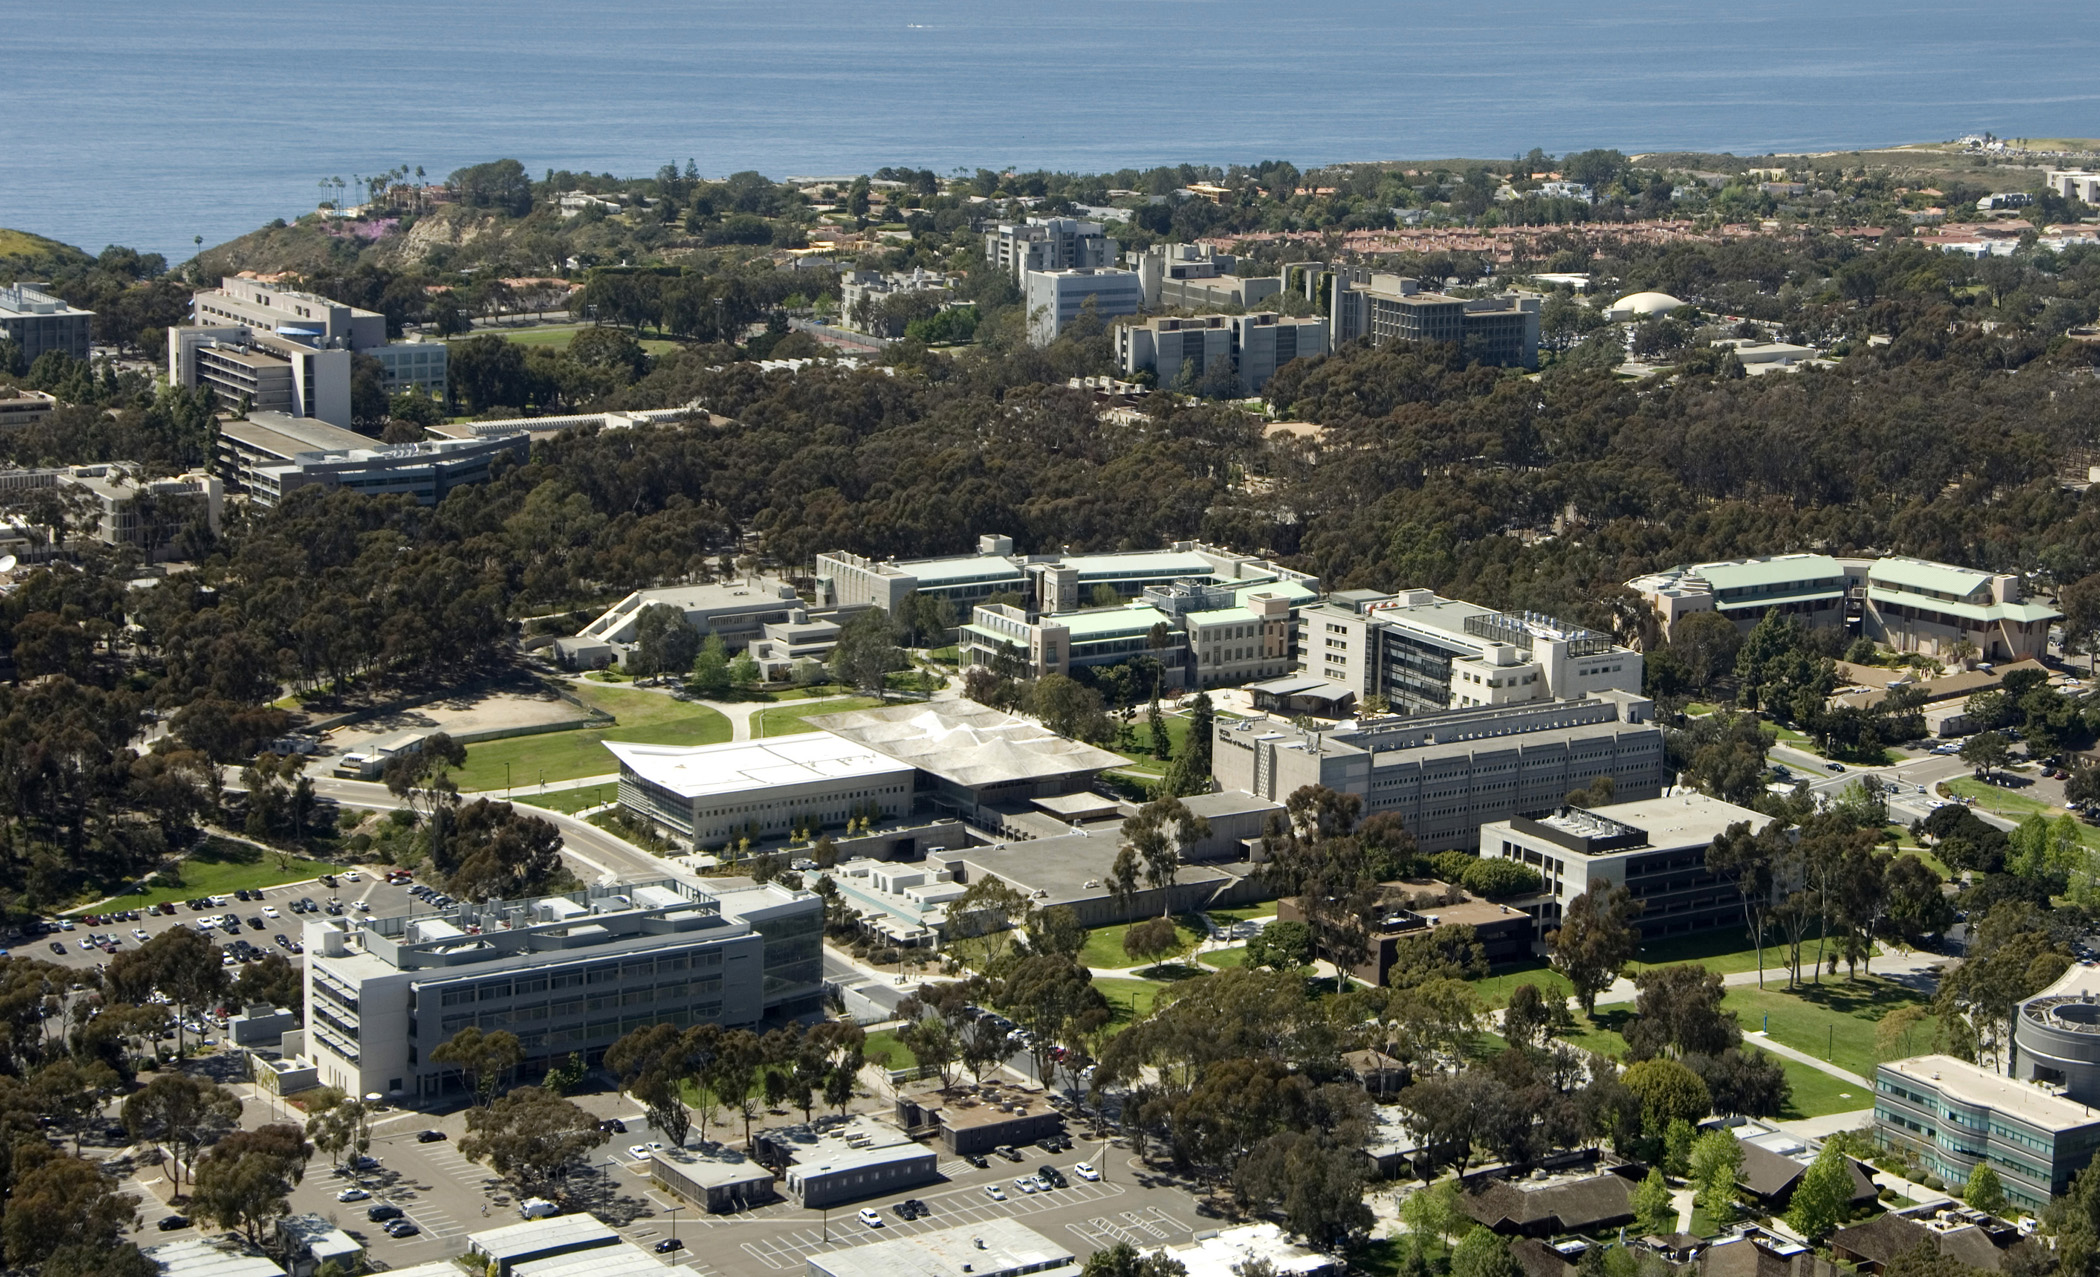 UCSD, Lyft Announce Campus Transportation Partnership - Times of San Diego